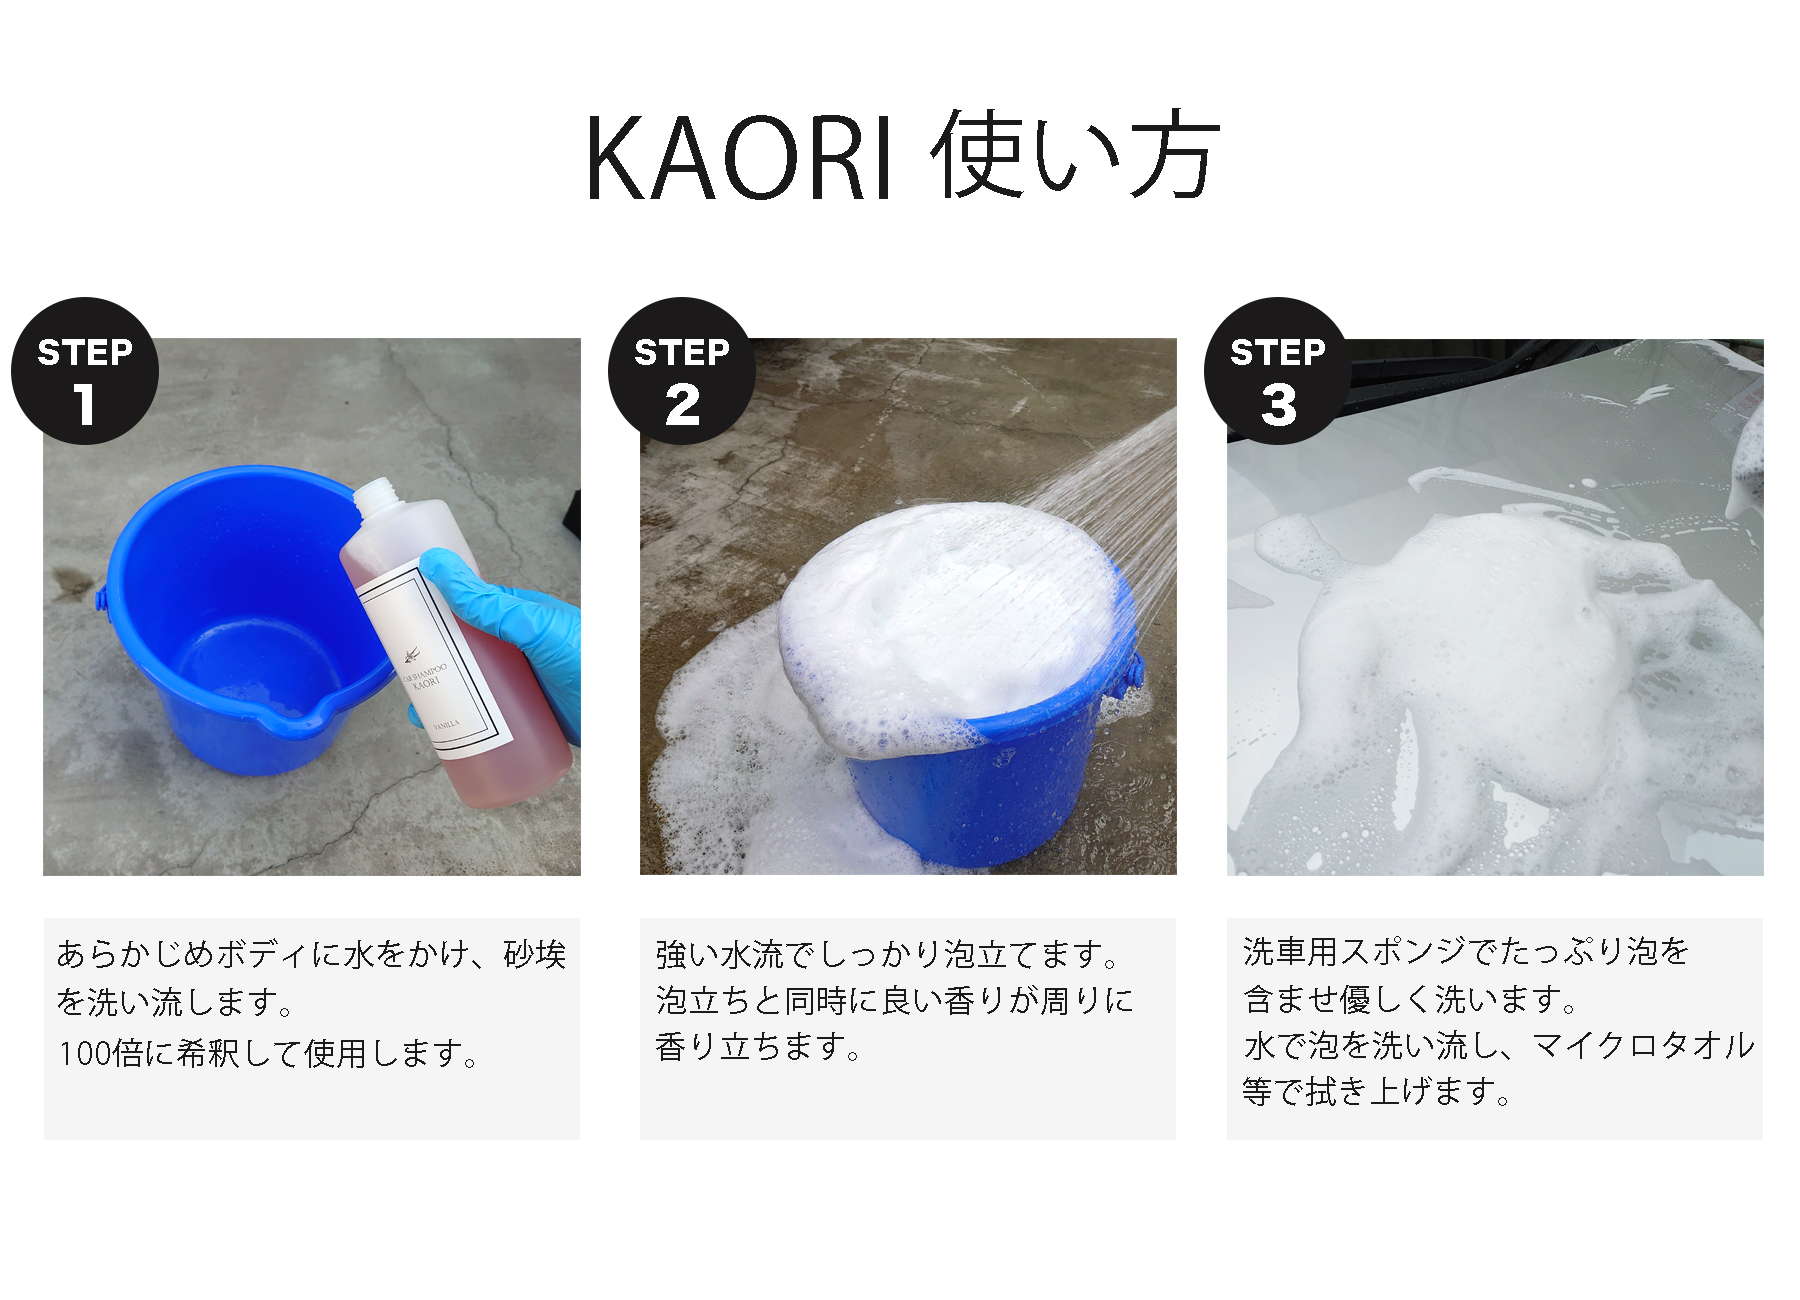 KAORI使用方法。あらかじめボディの砂埃を水で洗い流し、KAORIを10倍〜20倍で希釈し、よく泡立てます。洗車スポンジで優しく洗い流し、水で泡をしっかり洗い流し、マイクロファイバークロス等でしっかり拭き上げます。